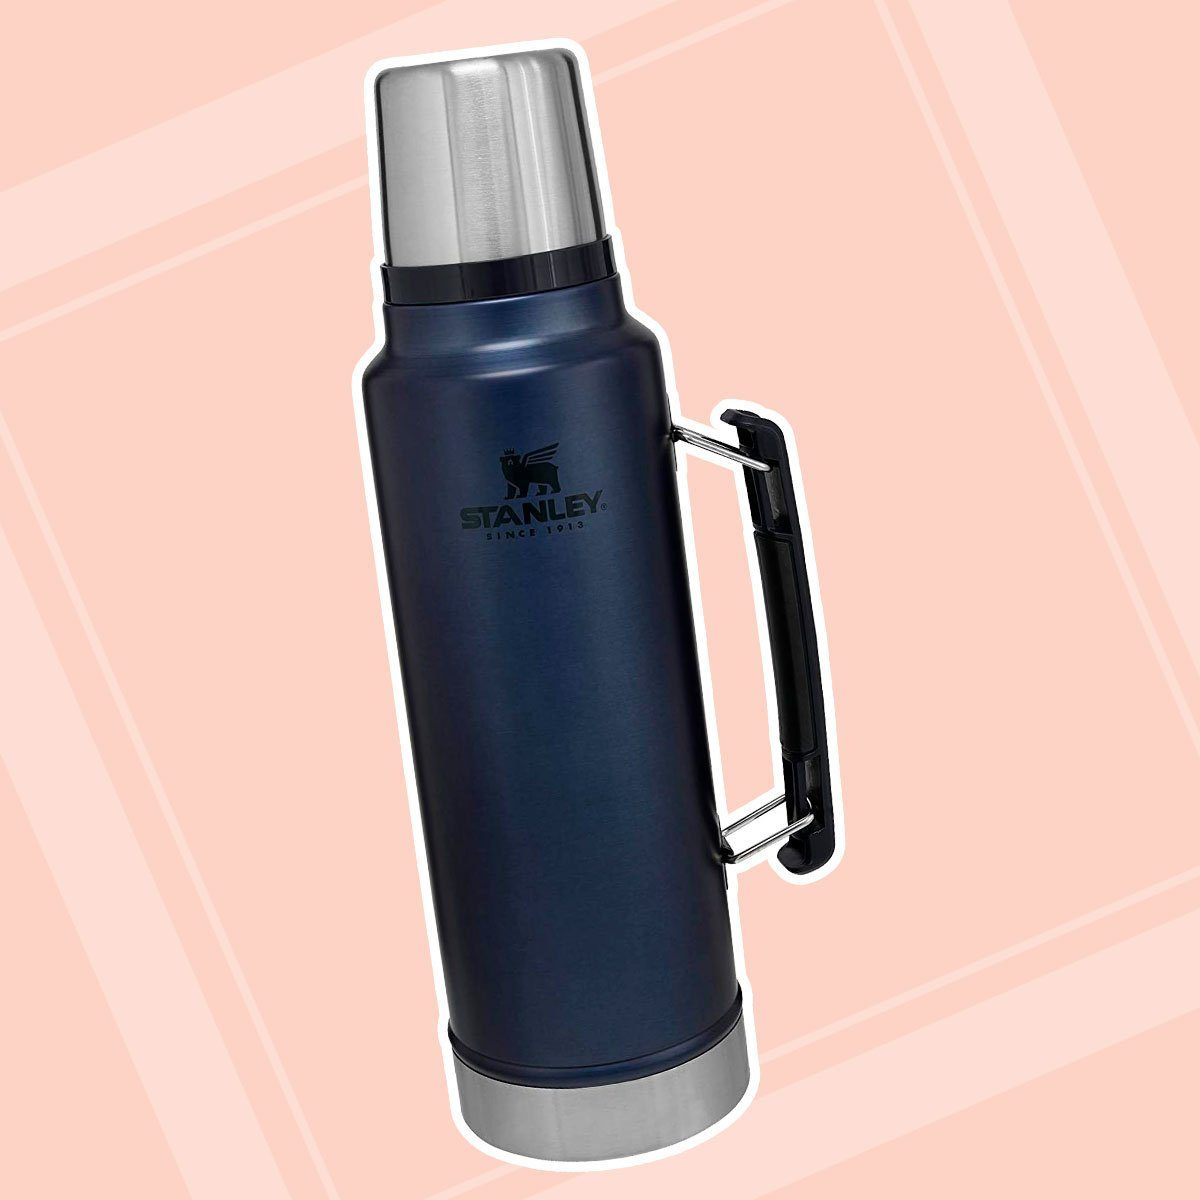 Stanley Classic Legendary Vacuum Insulated Bottle 1.5qt